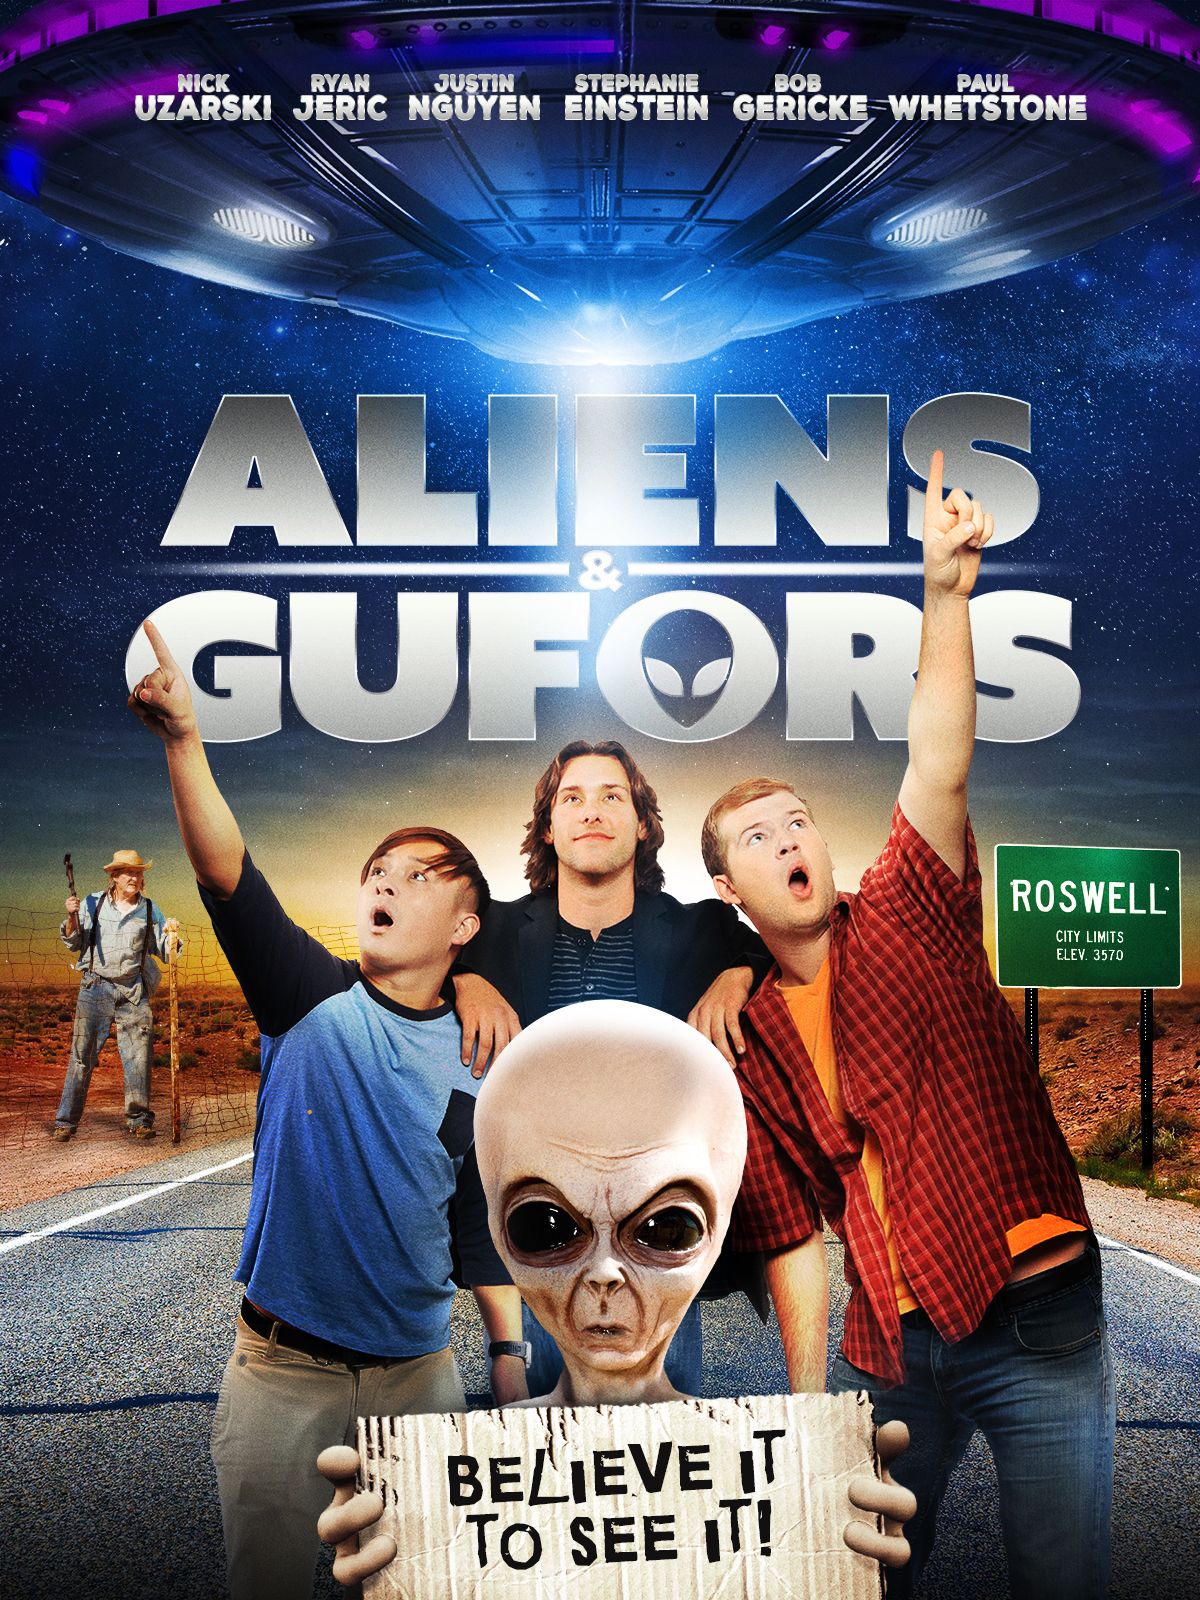 Aliens & Gufors keyart